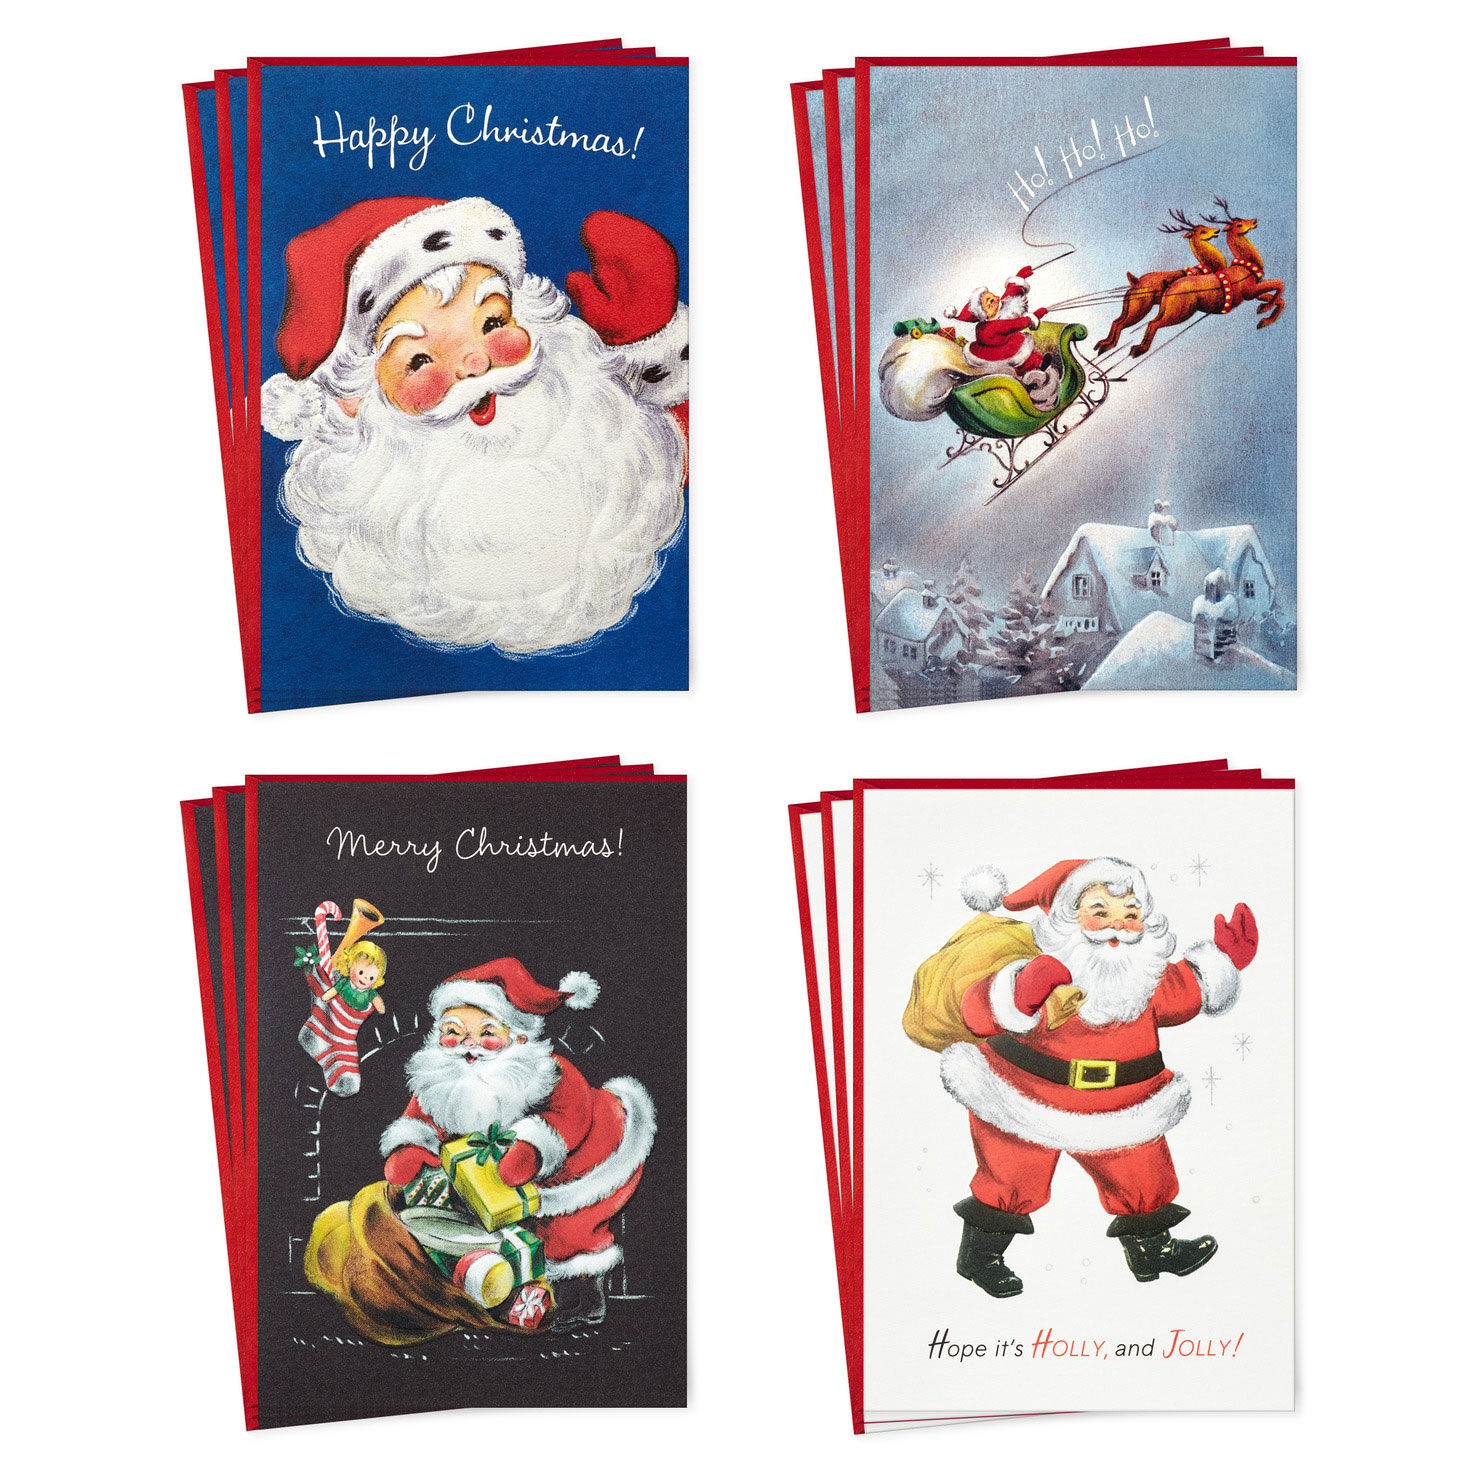 https://www.hallmark.com/dw/image/v2/AALB_PRD/on/demandware.static/-/Sites-hallmark-master/default/dwd6e7c775/images/finished-goods/products/5CZE1039/Vintage-Santa-Assortment-Boxed-Christmas-Cards_5CZE1039_01.jpg?sfrm=jpg